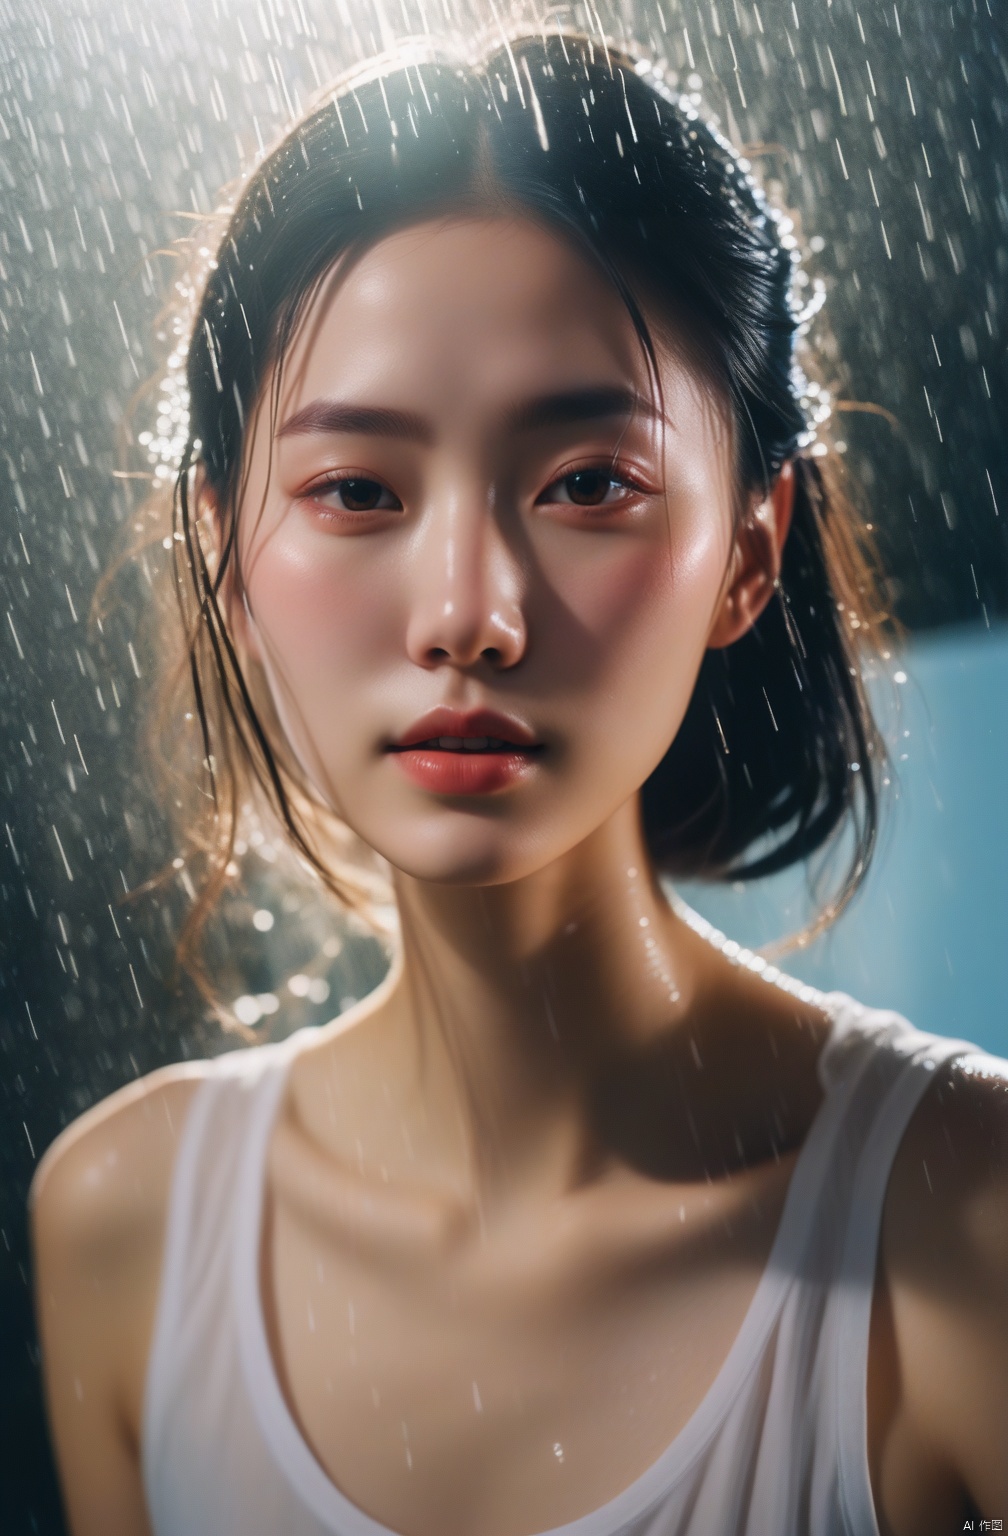 photographic of a Chinese girl wet T-shirt water drops, splash detailed, surreal dramatic lighting shadow (lofi, analog), kodak film by Brandon Woelfel Ryan McGinley